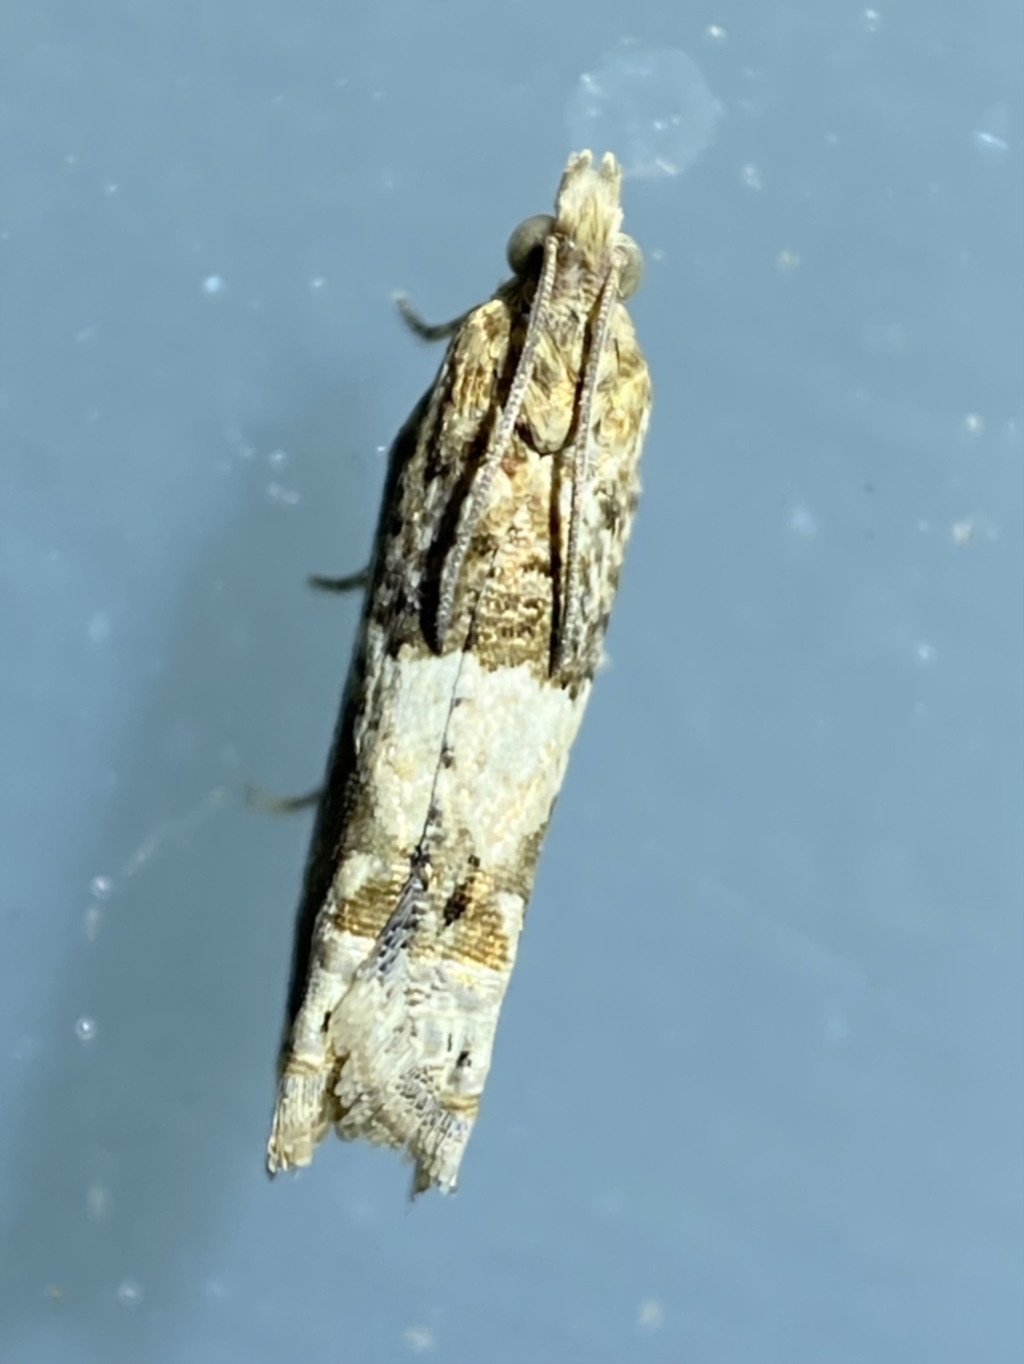 Spilonota constrictana at suppressed - 17 Jan 2022